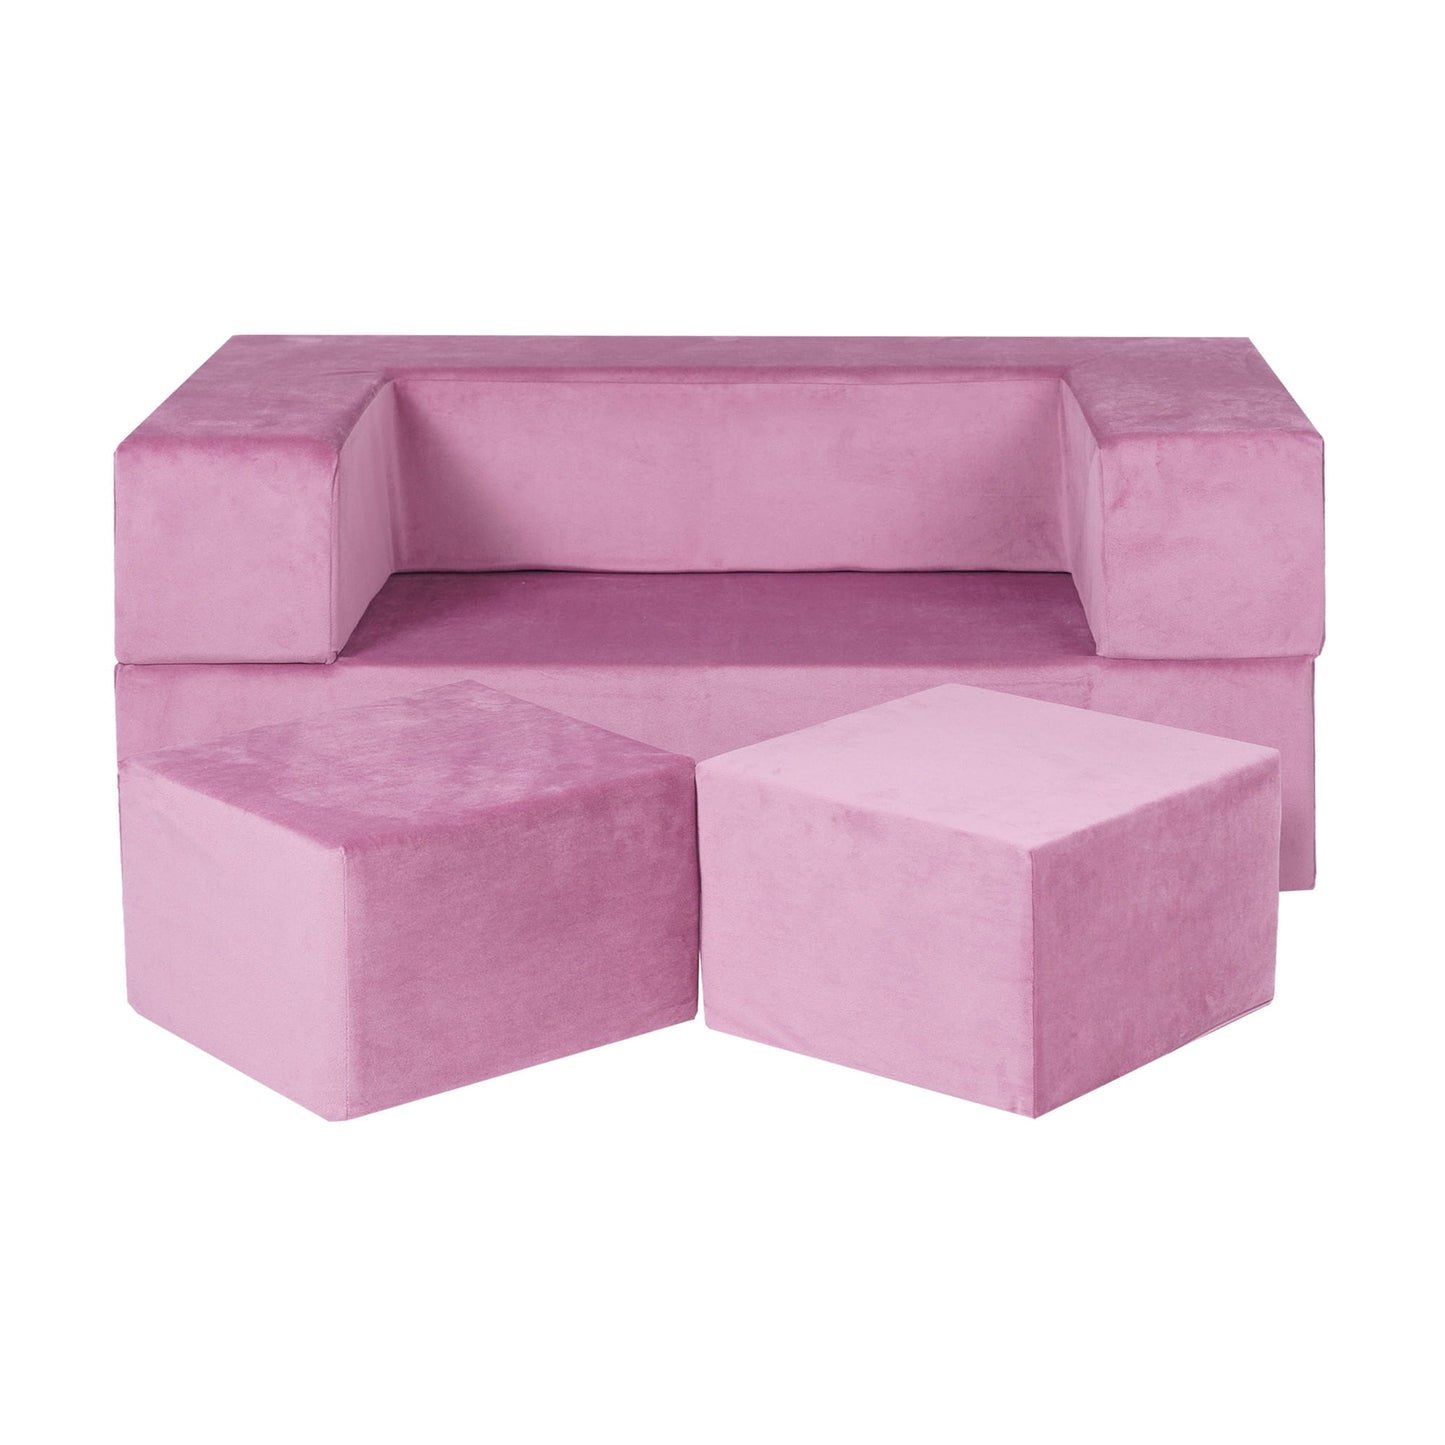 Pink Children's Sofa - Children's Soft Play Sofa - Children's Soft Play - Pink Sofa for Children